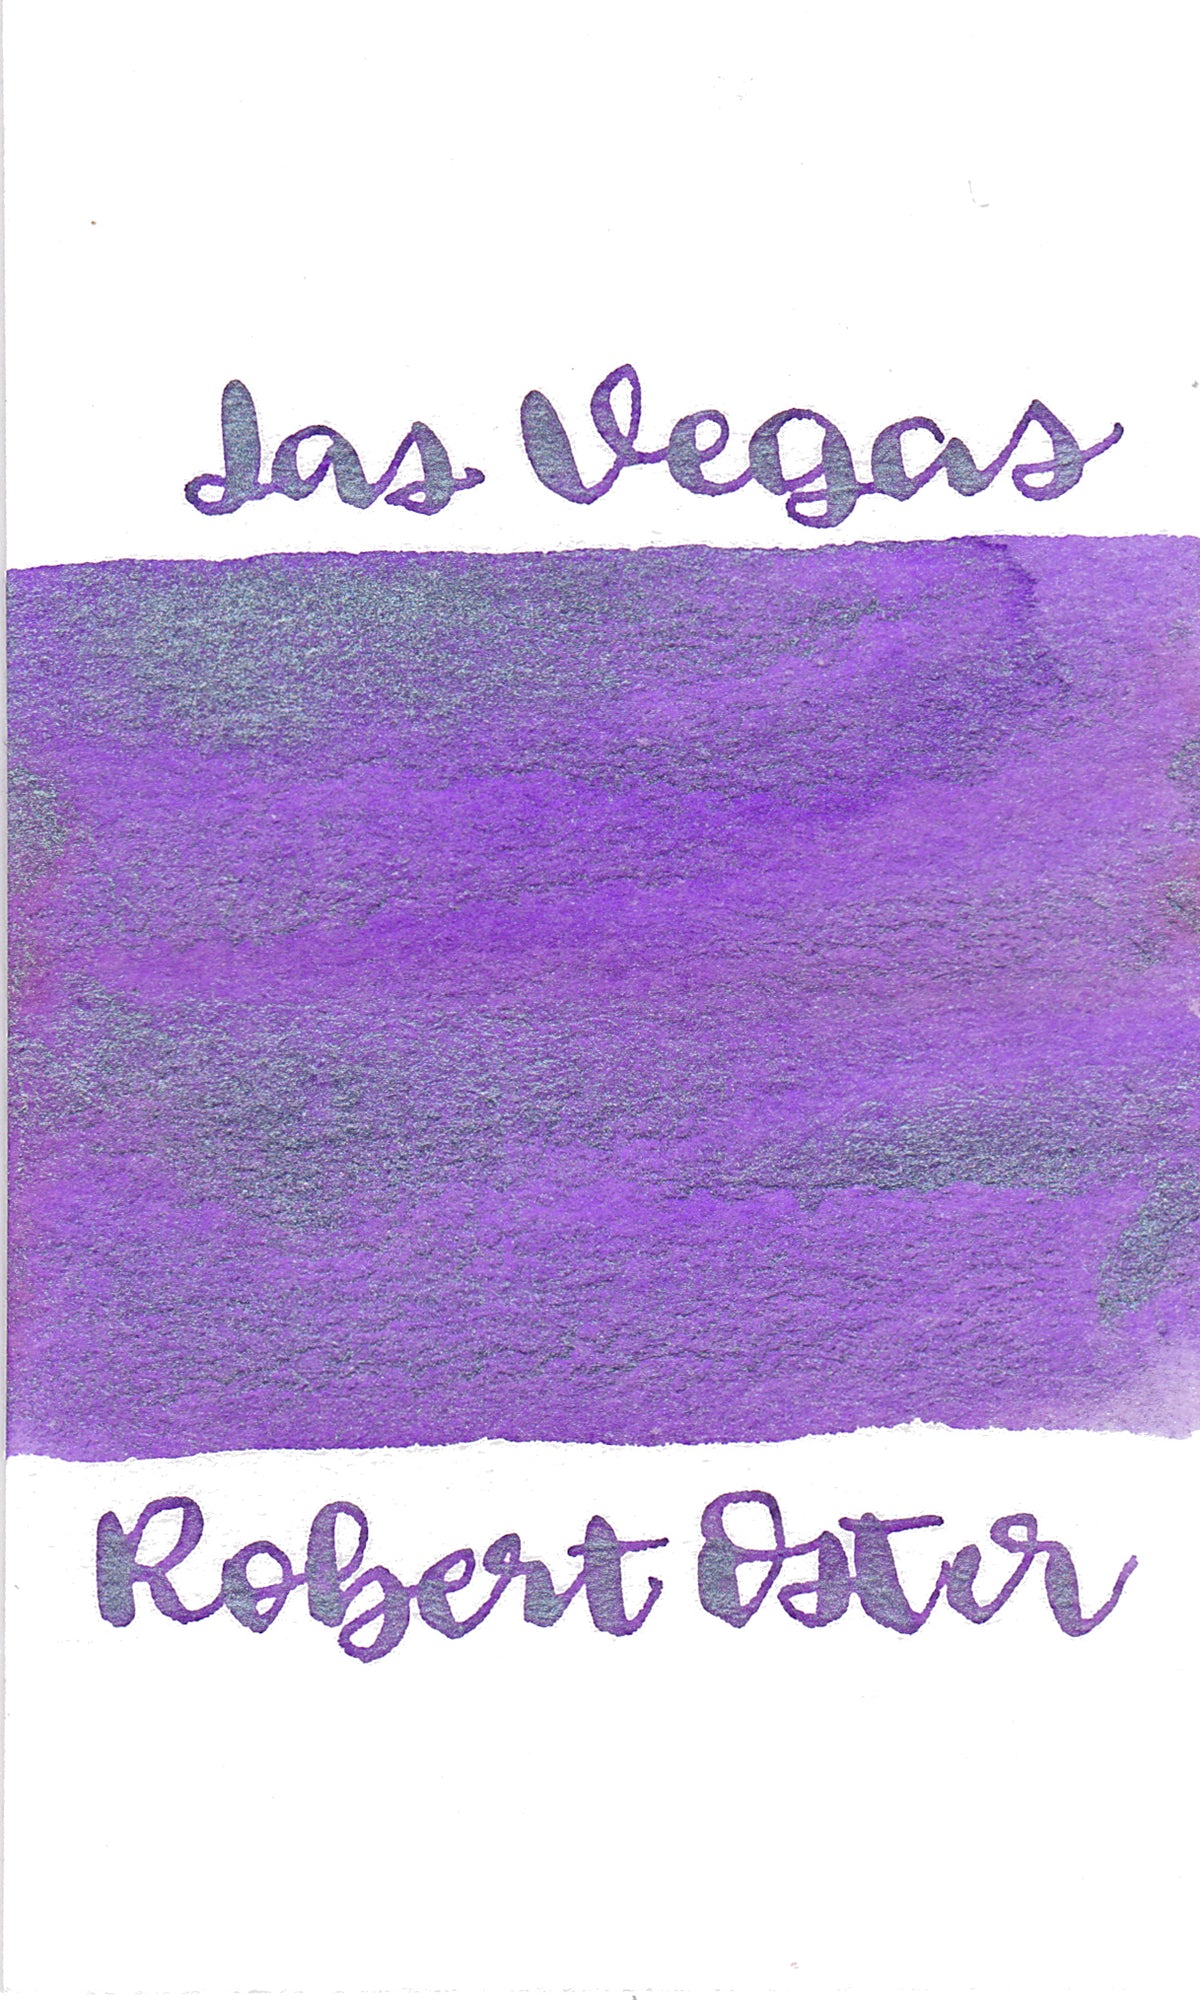 Robert Oster Cities of America Shake & Shimmer Las Vegas